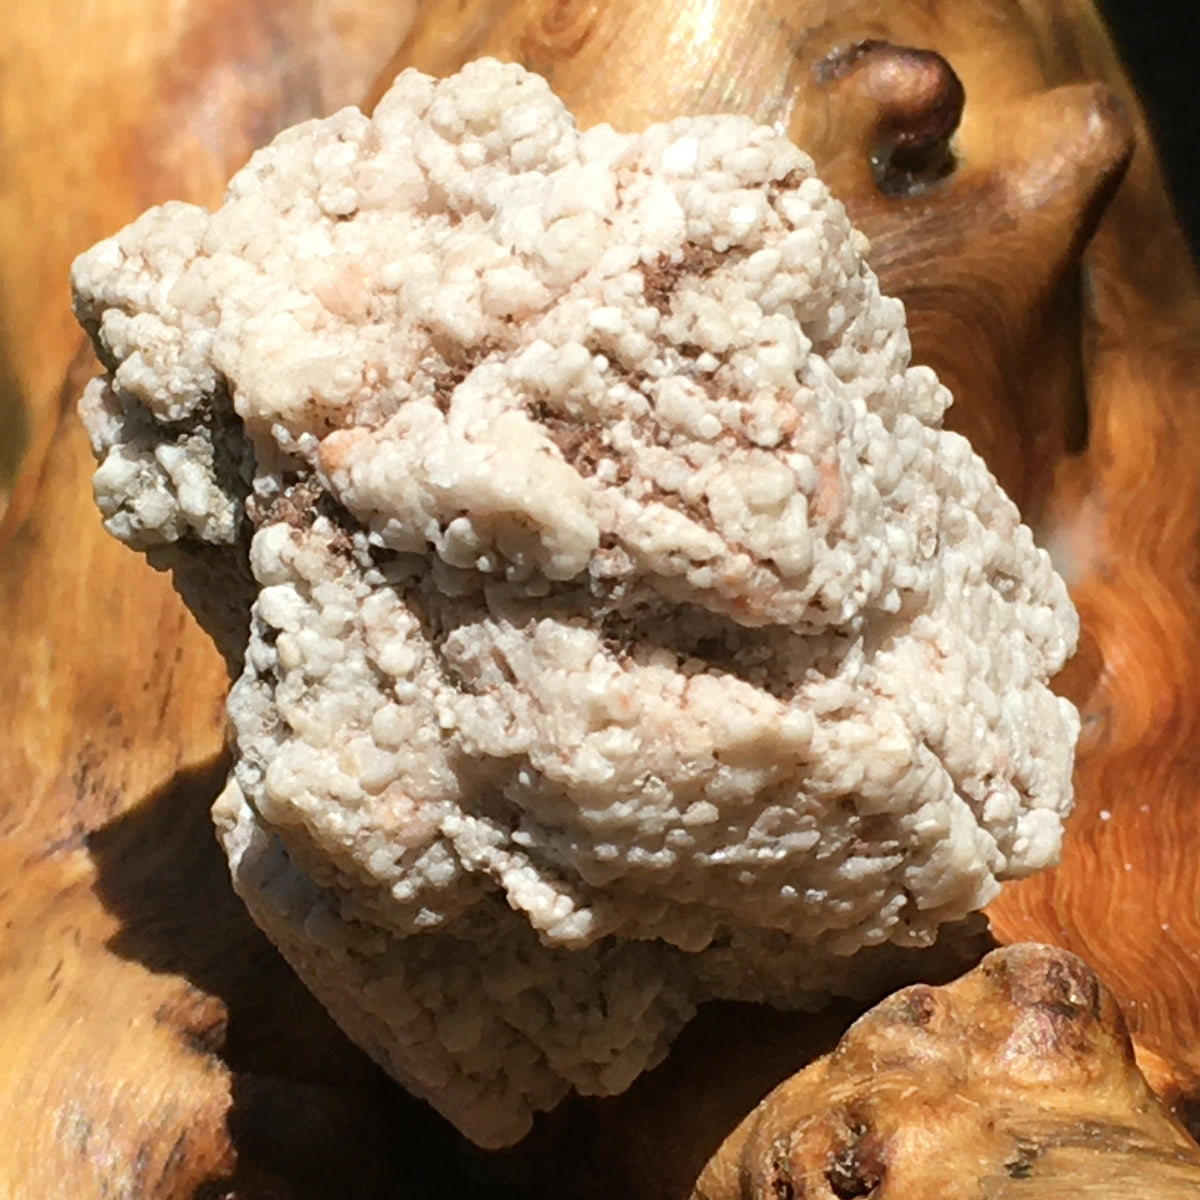 Dolomite Pseudomorph Aragonite AREA 51 Roswell Stone-Moldavite Life